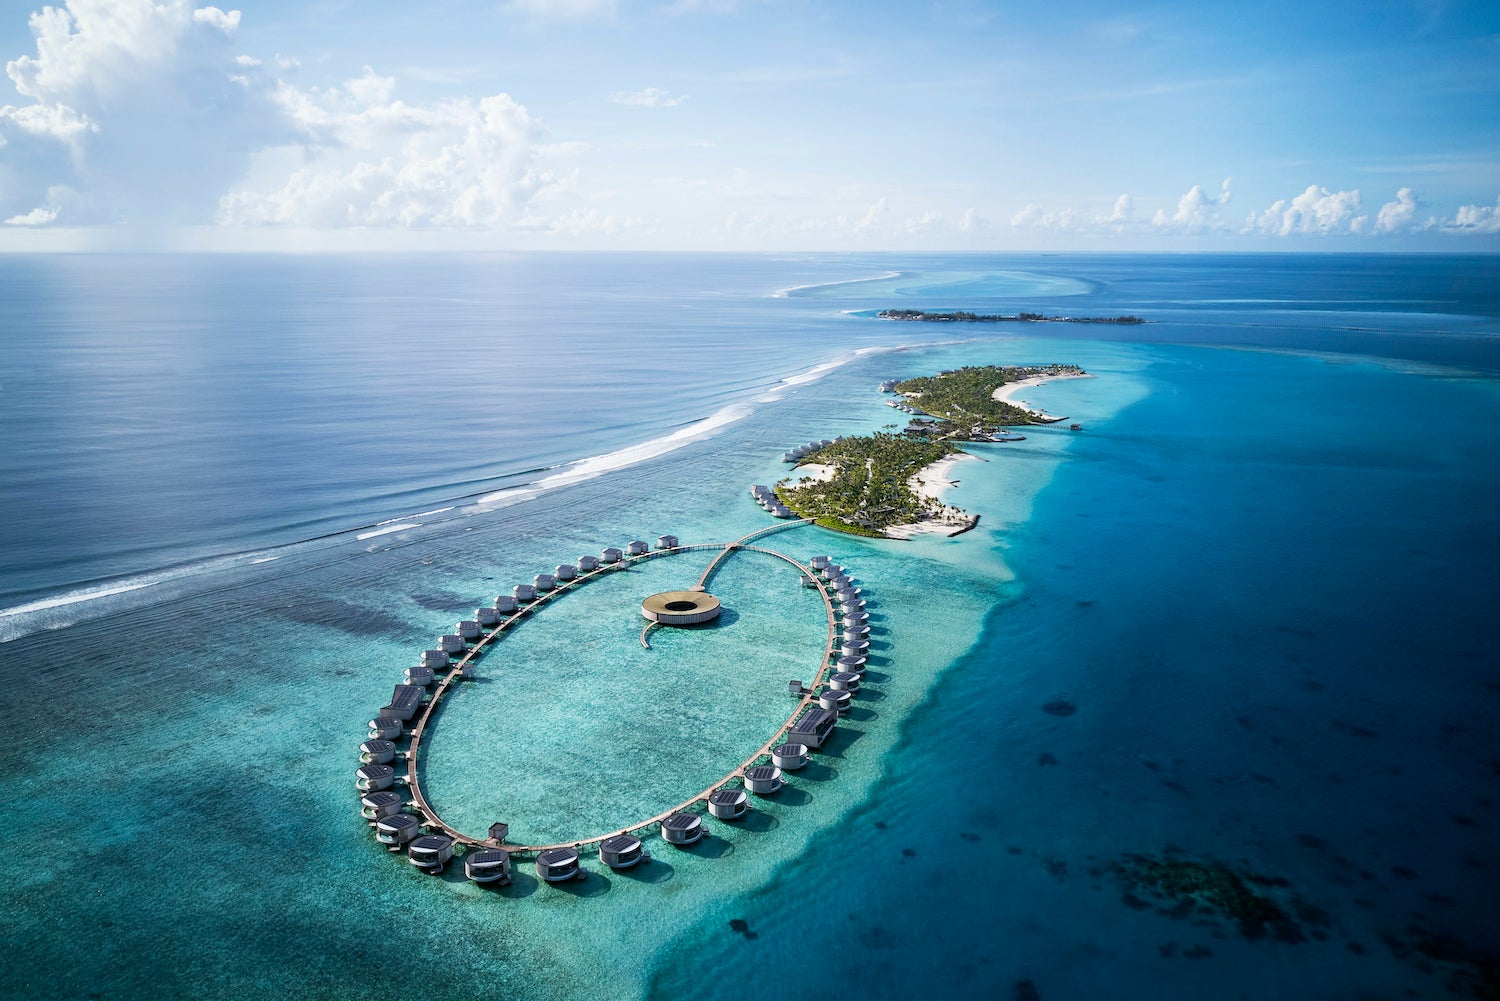 Ritz Carlton Maldives resort aerial view of overwater villas in a lagoon